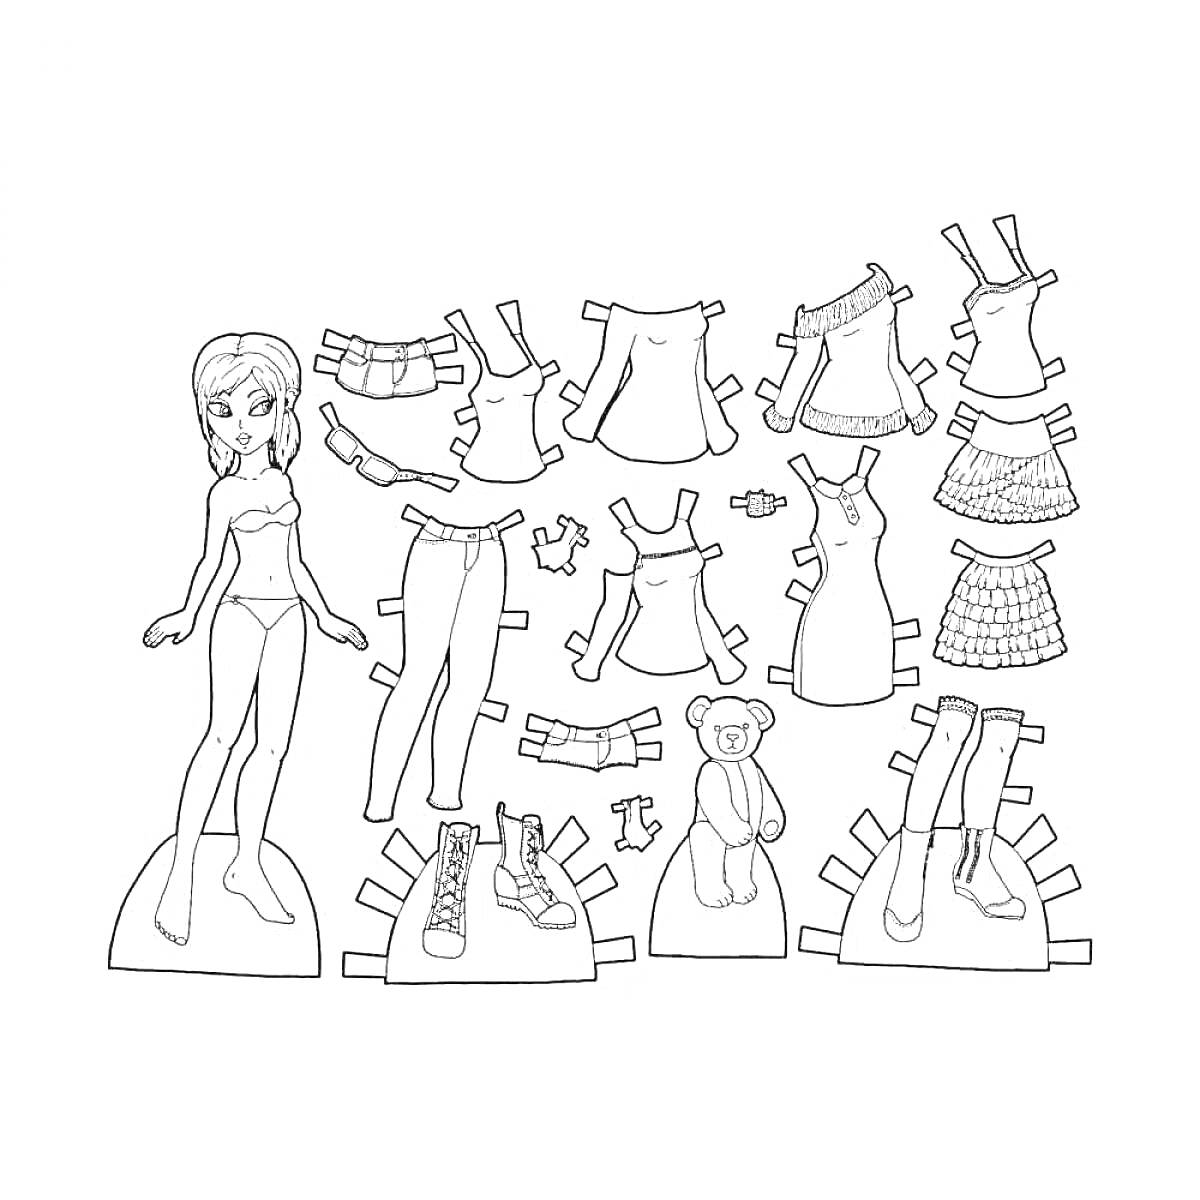 На раскраске изображено: Утка Лалафанфан, Одежда, Юбки, Футболки, Штаны, Обувь, Кукла, Бумажная кукла